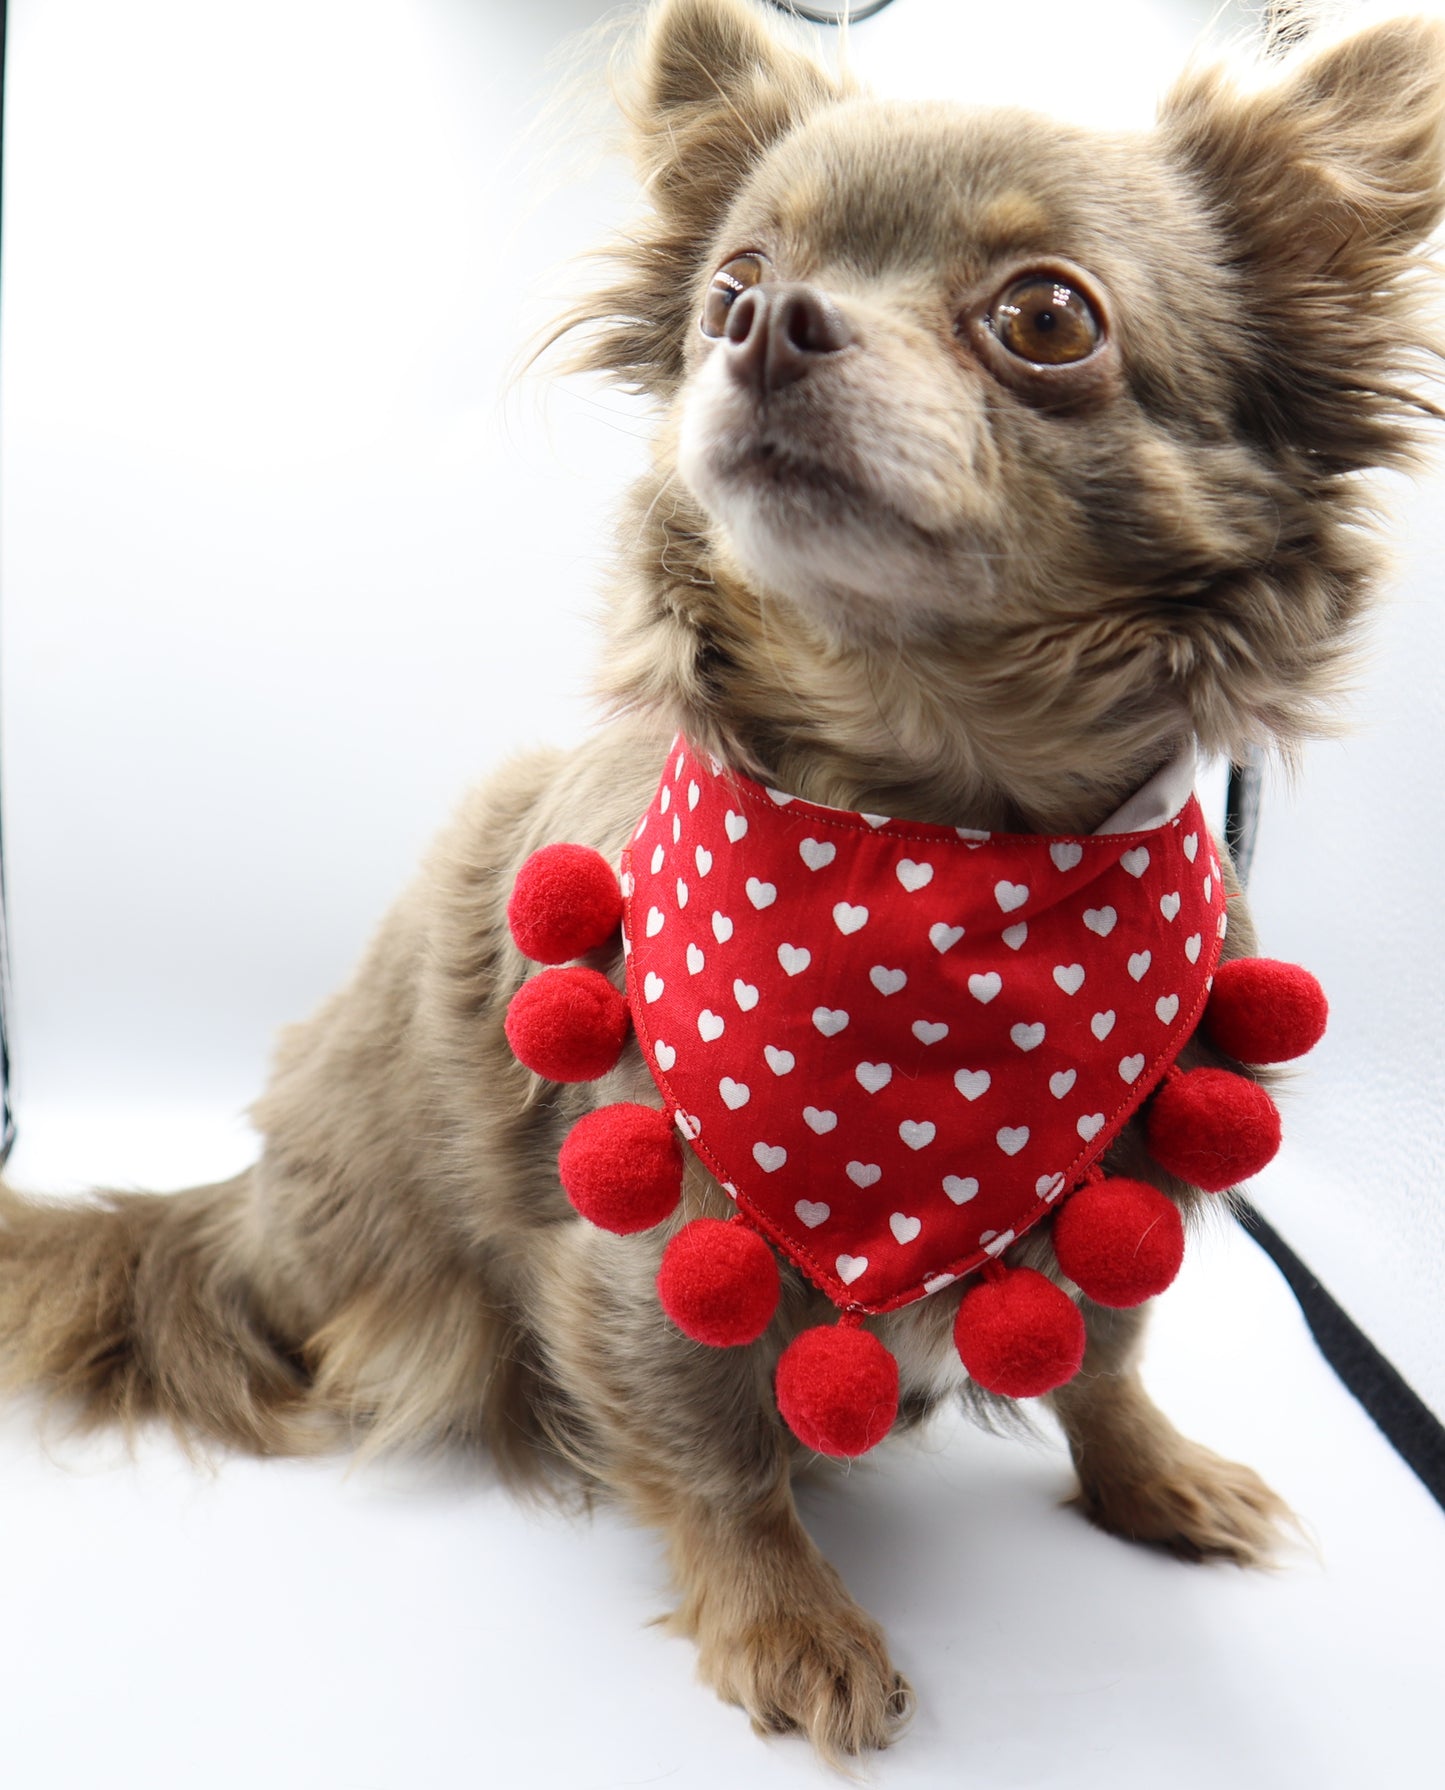 Dog Bandana in Red Hearts Fabric with Pom Pom Trim Valentines Day